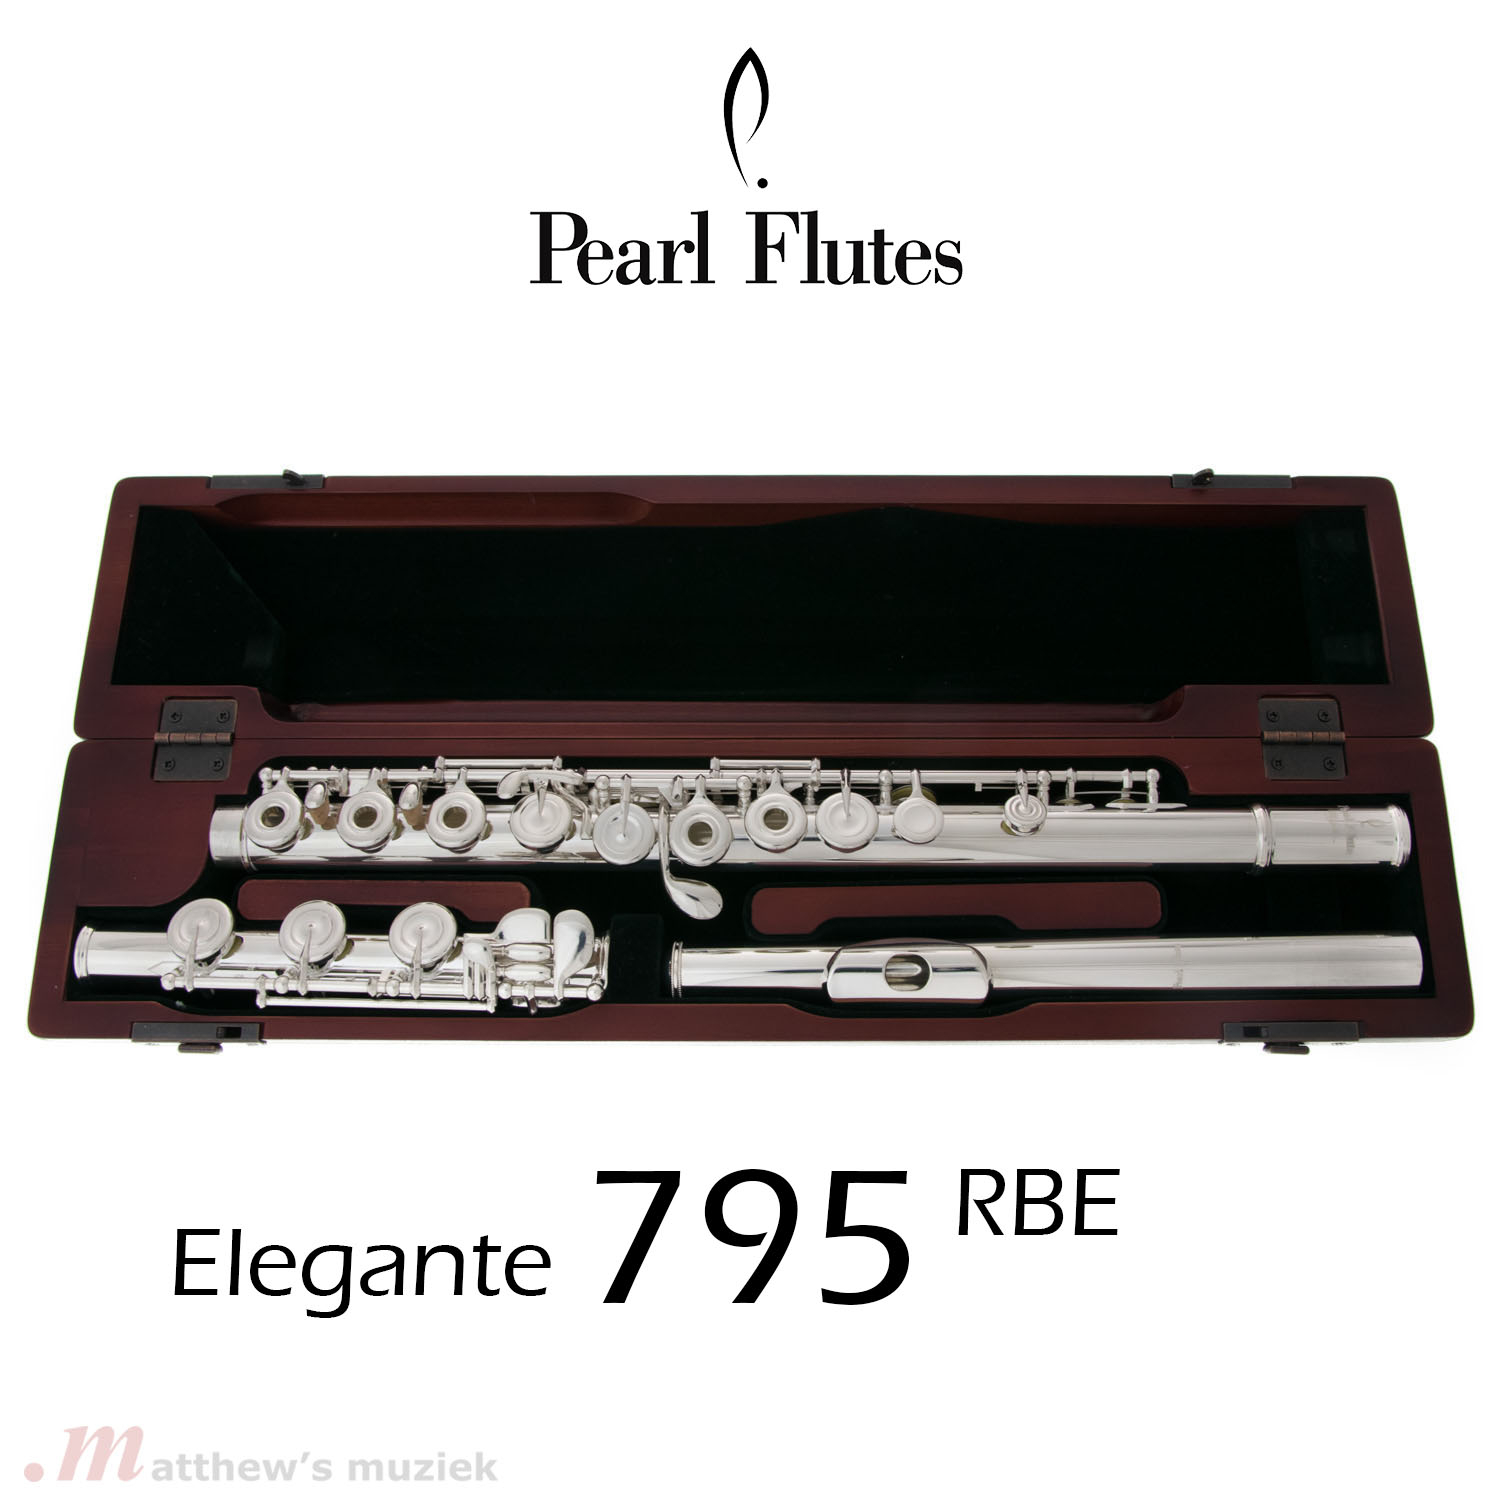 Pearl Flute - Elegante 795 RBE